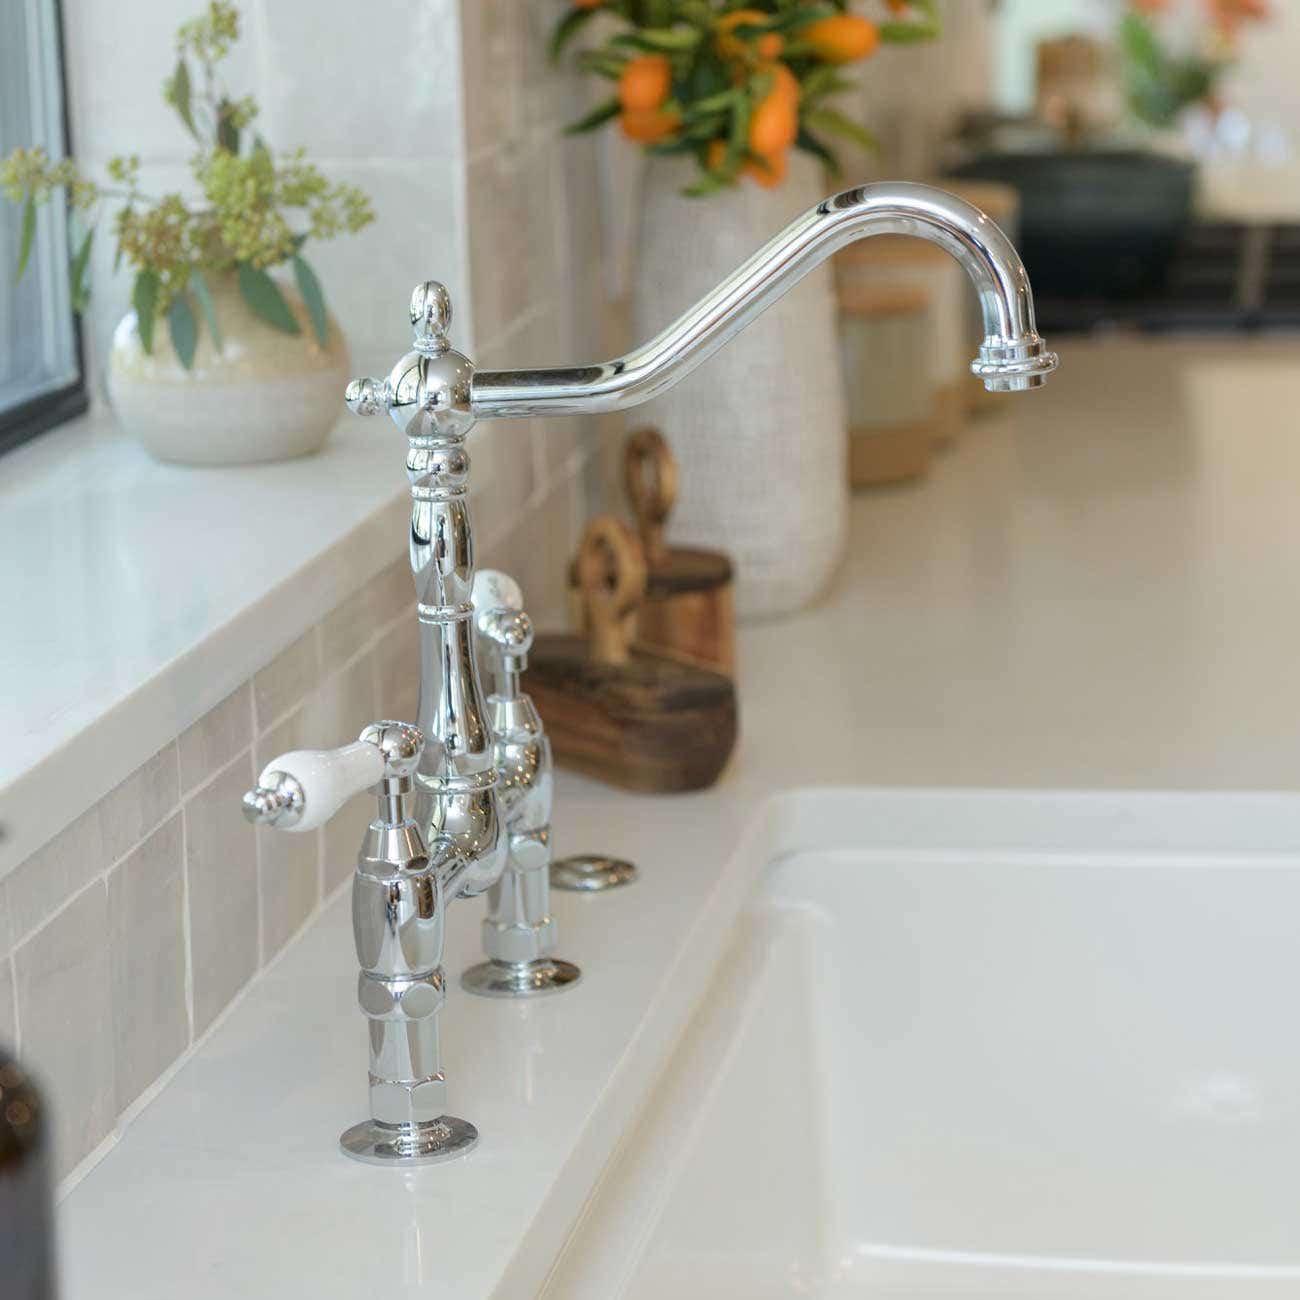 Randolph Morris Kitchen Sink Faucets